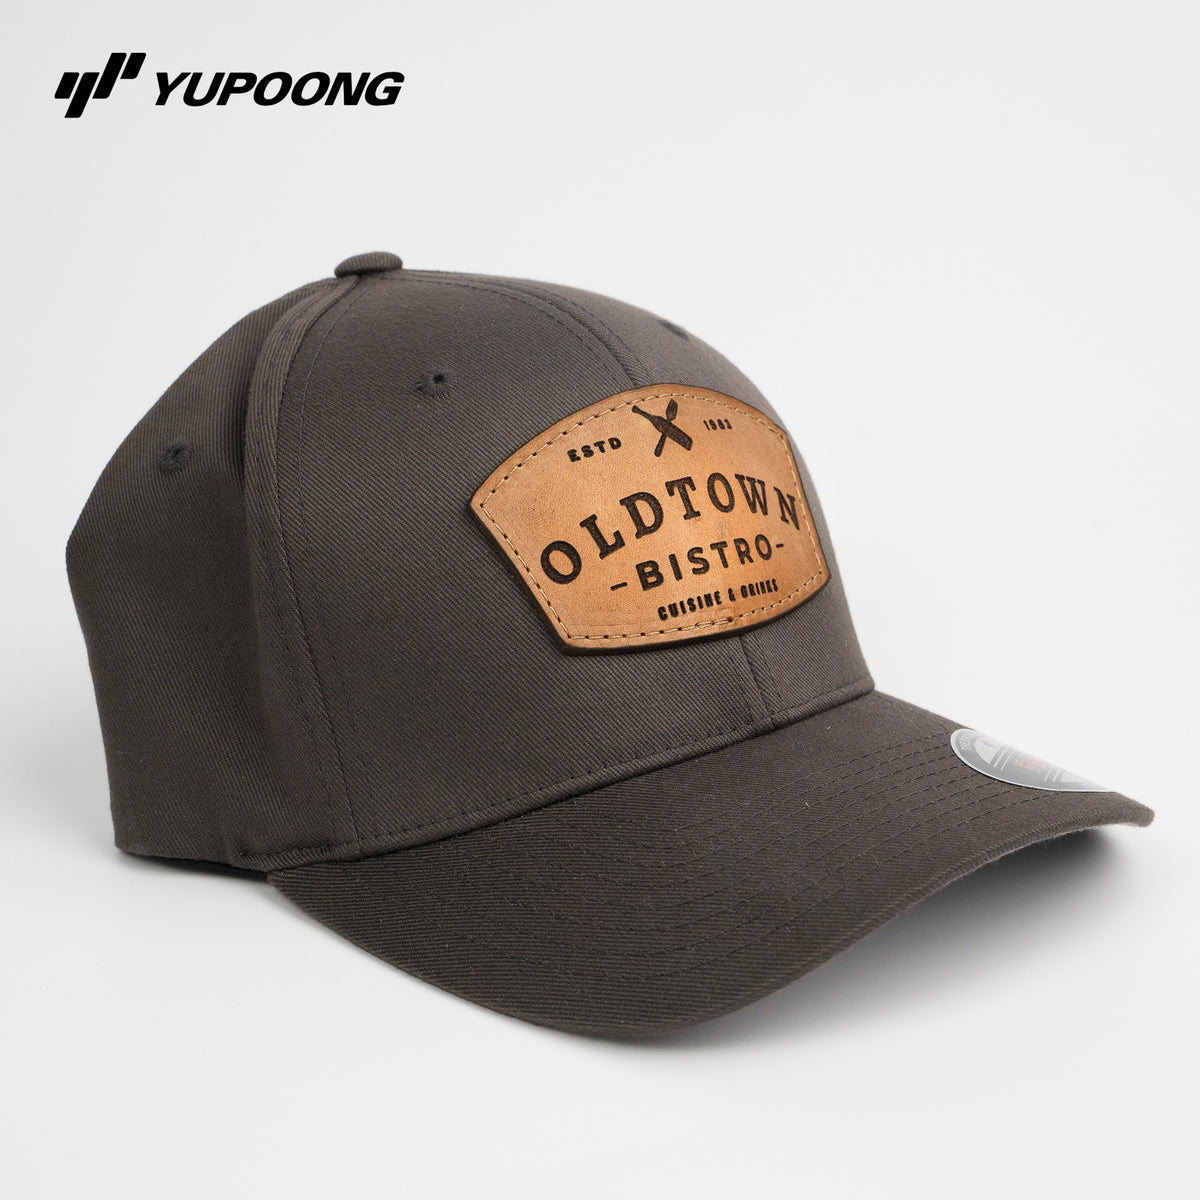 Custom New Era Hats - Fully Customizable [Available in Bulk]